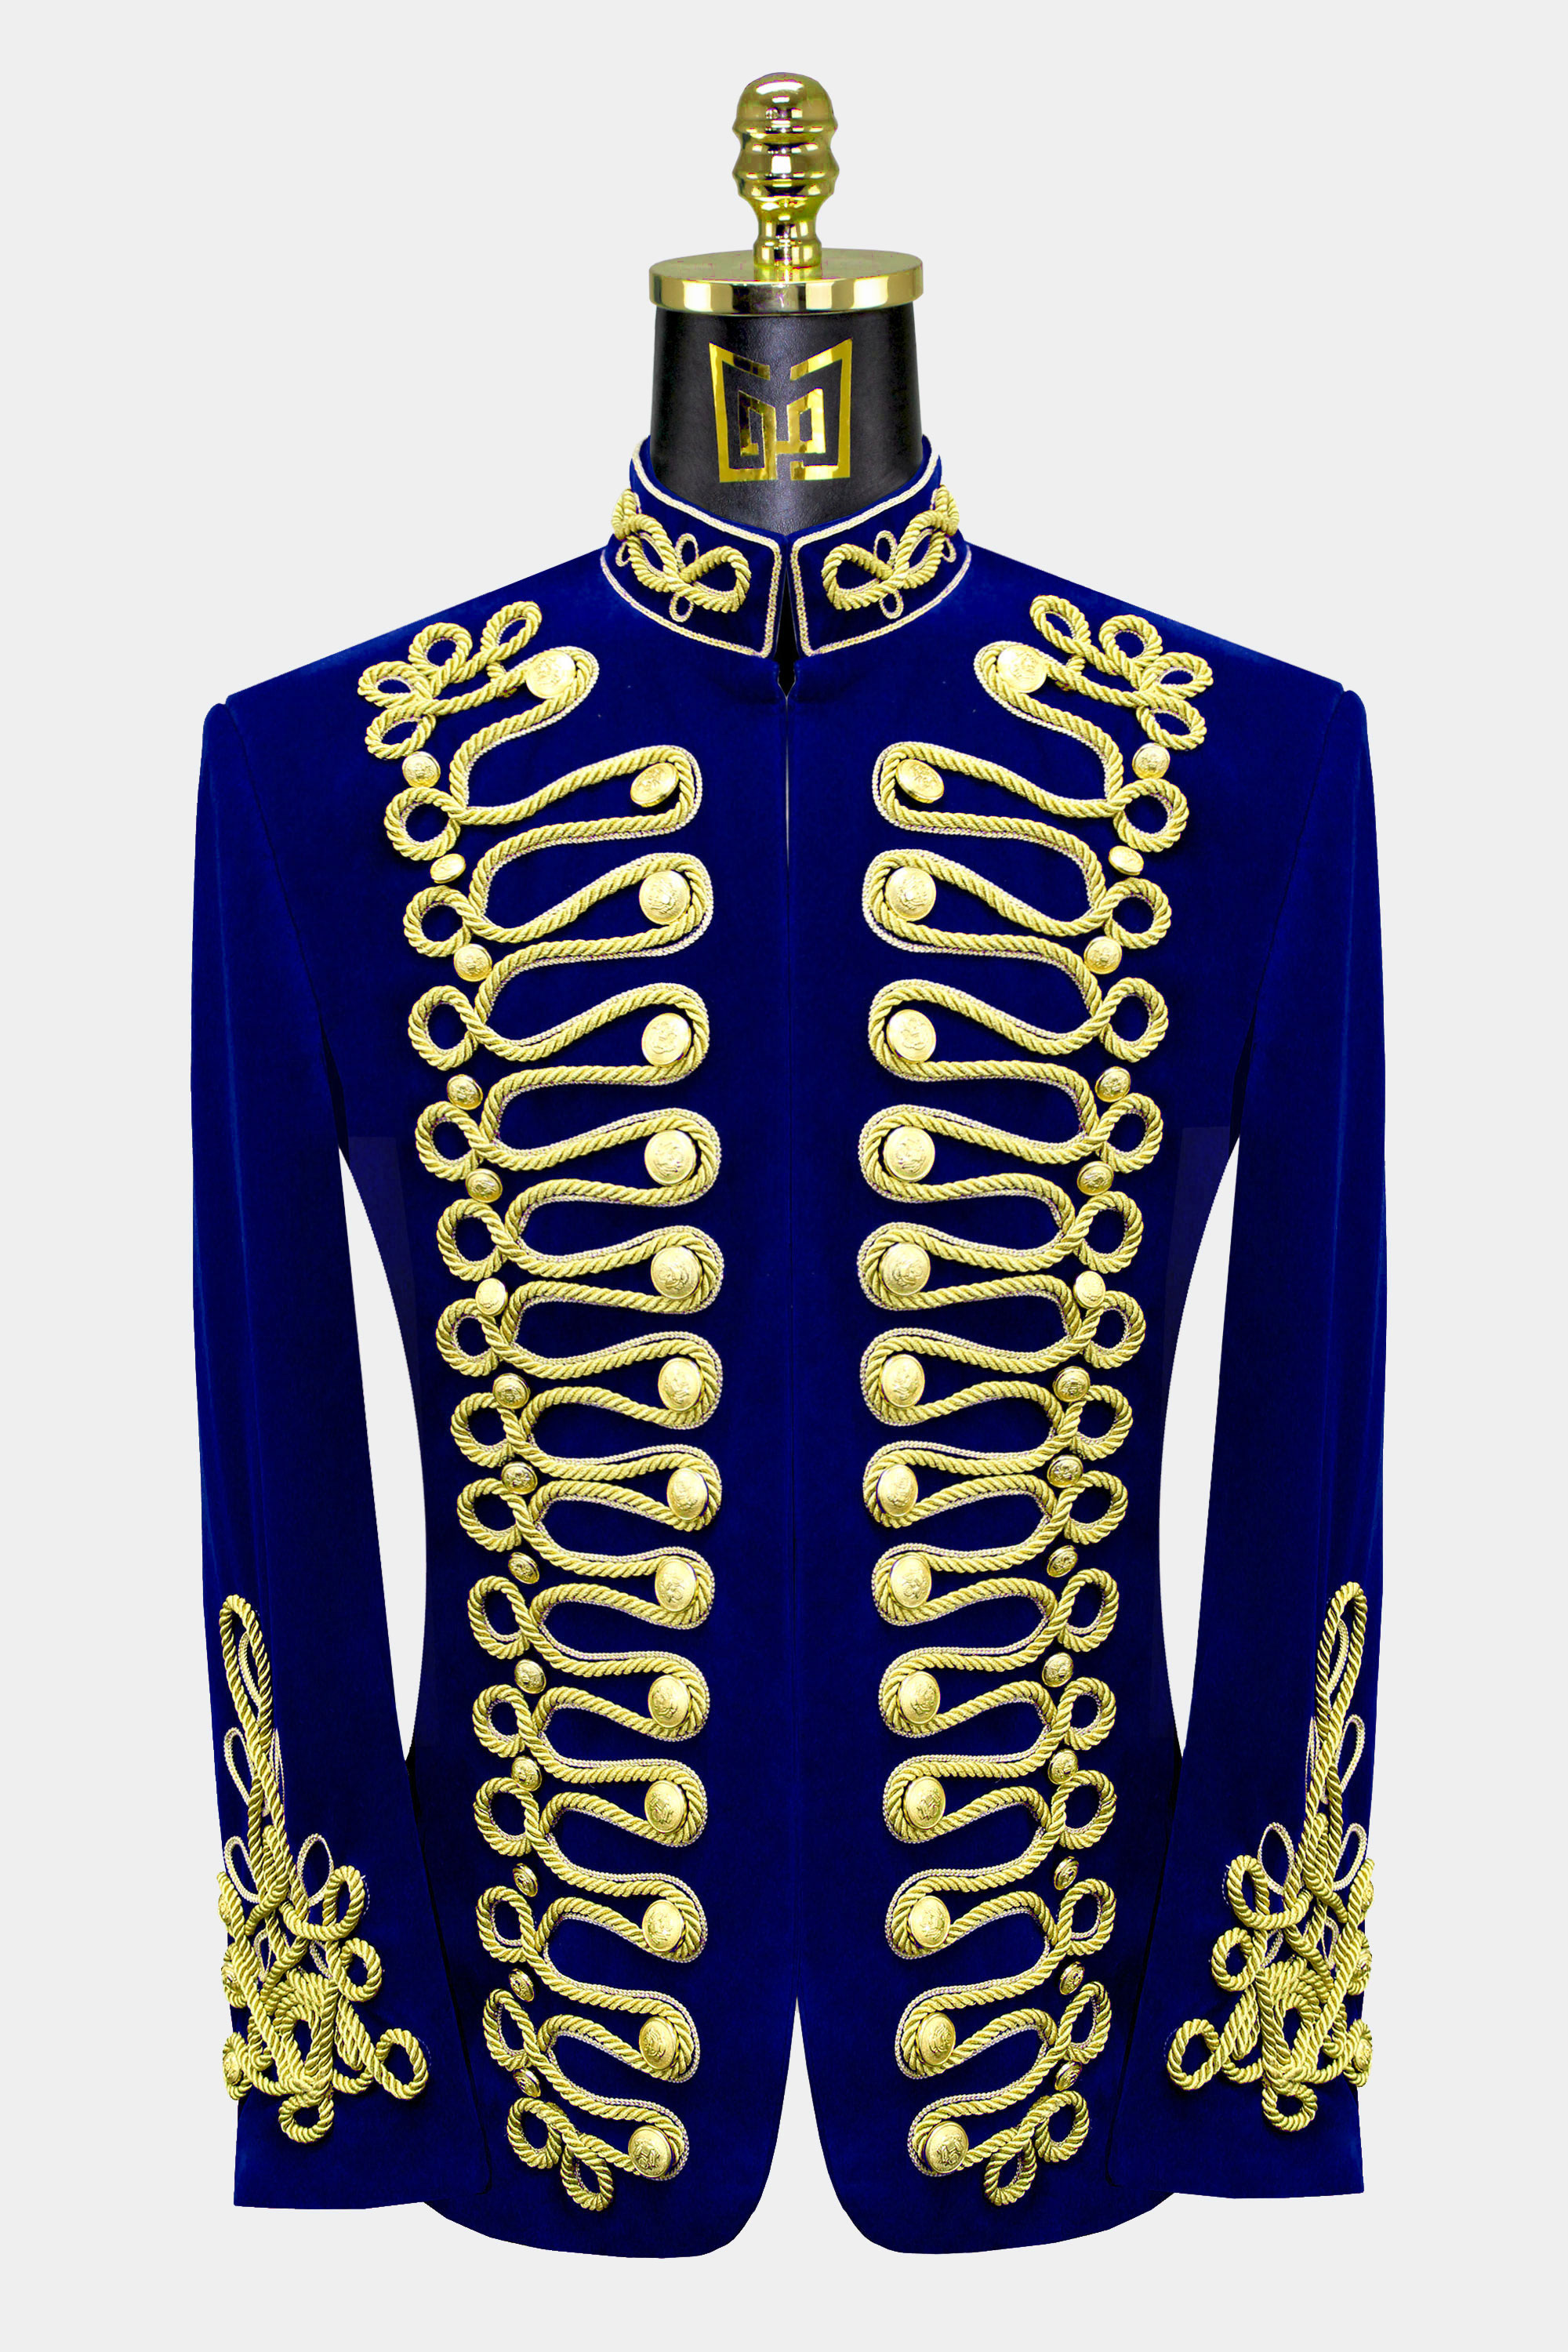 Mens-Royal-Blue-and-Gold-Mandarin-Collar-Jacket-Prom-Blazer-Wedding-Groom-Suit-from-Gentlemansguru.com